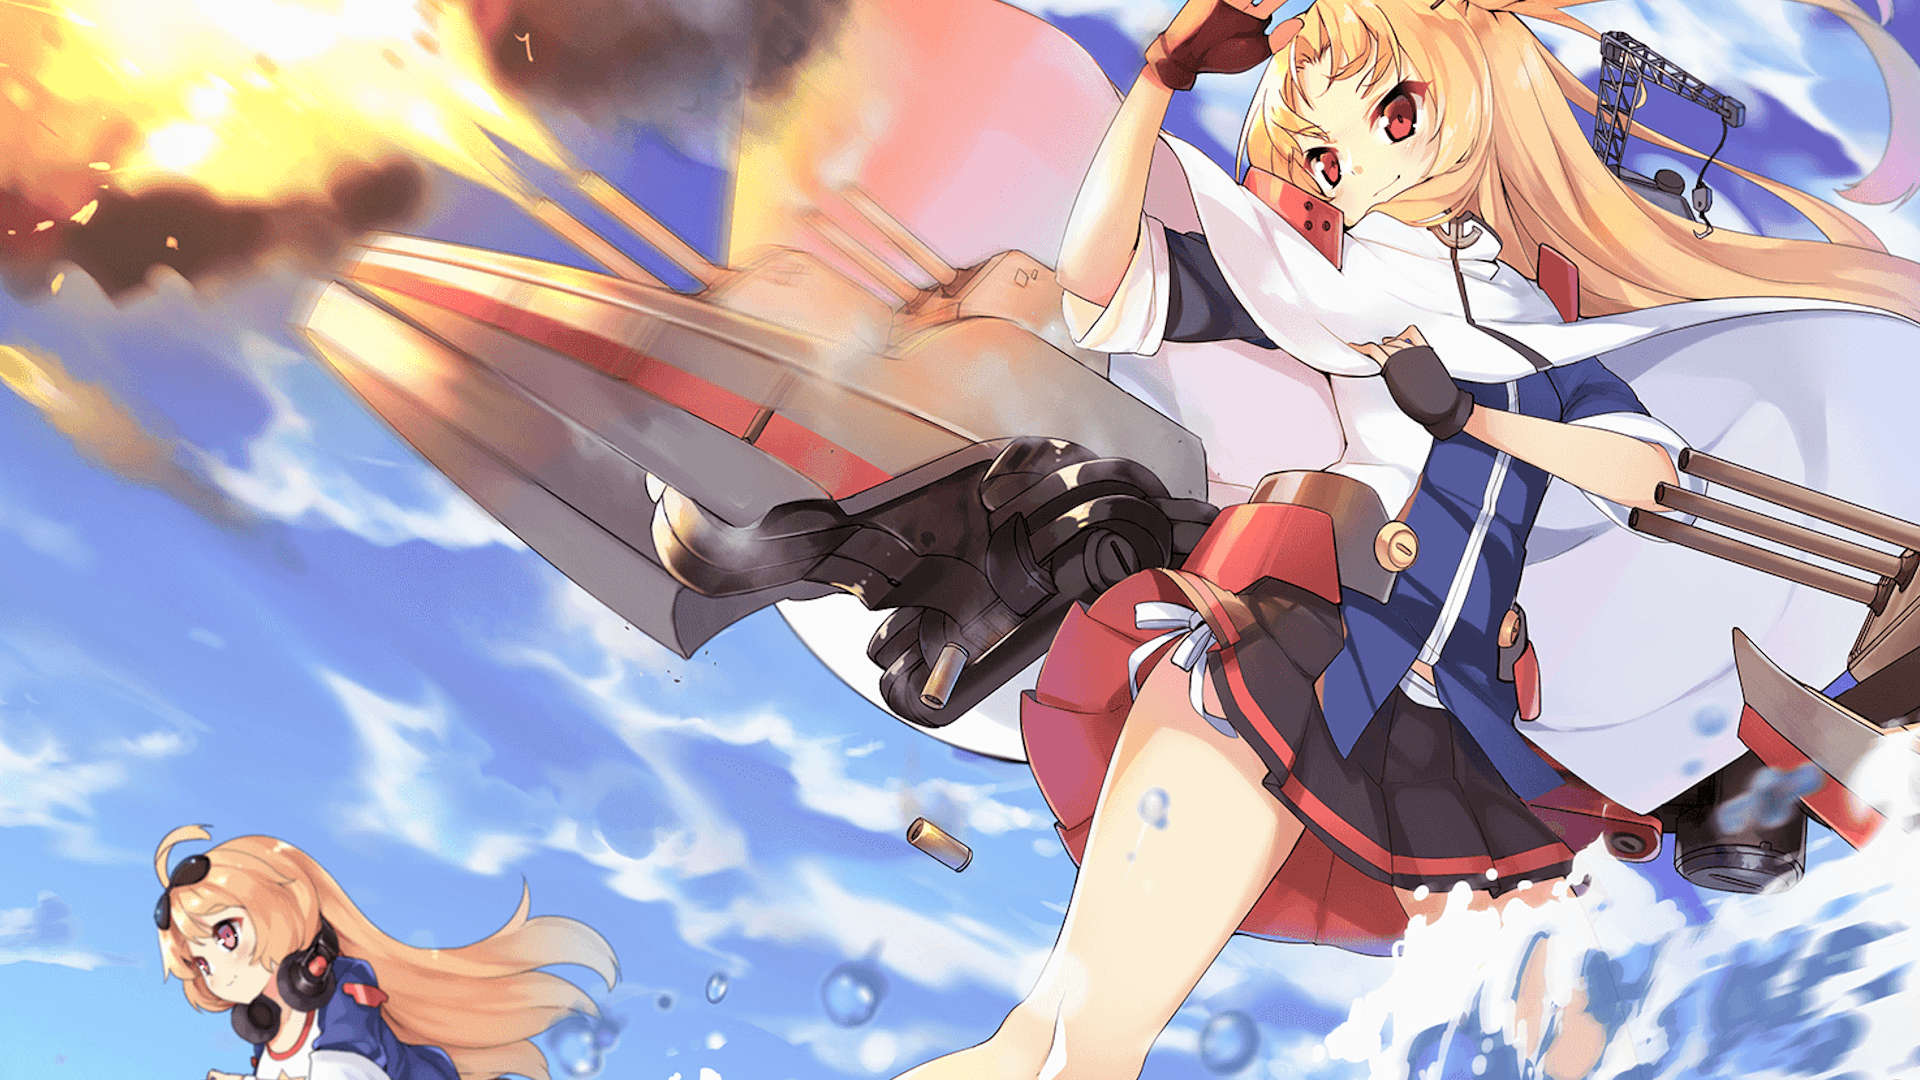 Best gacha games: Azur Lane. Image shows two anime girls in battle.